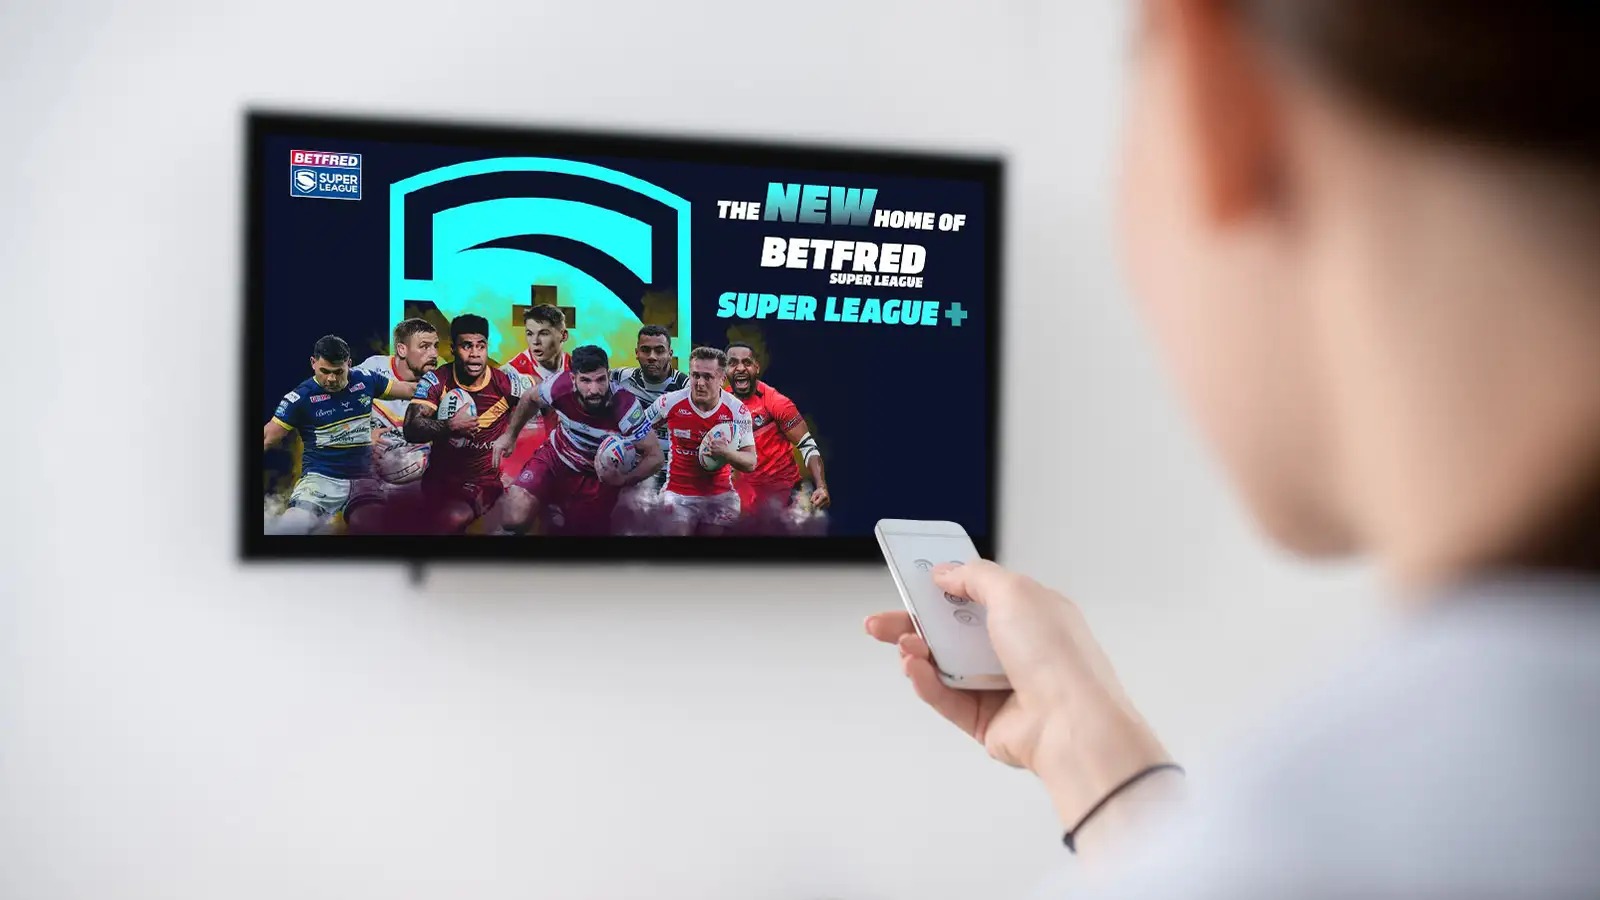 Super League+ on TV screen